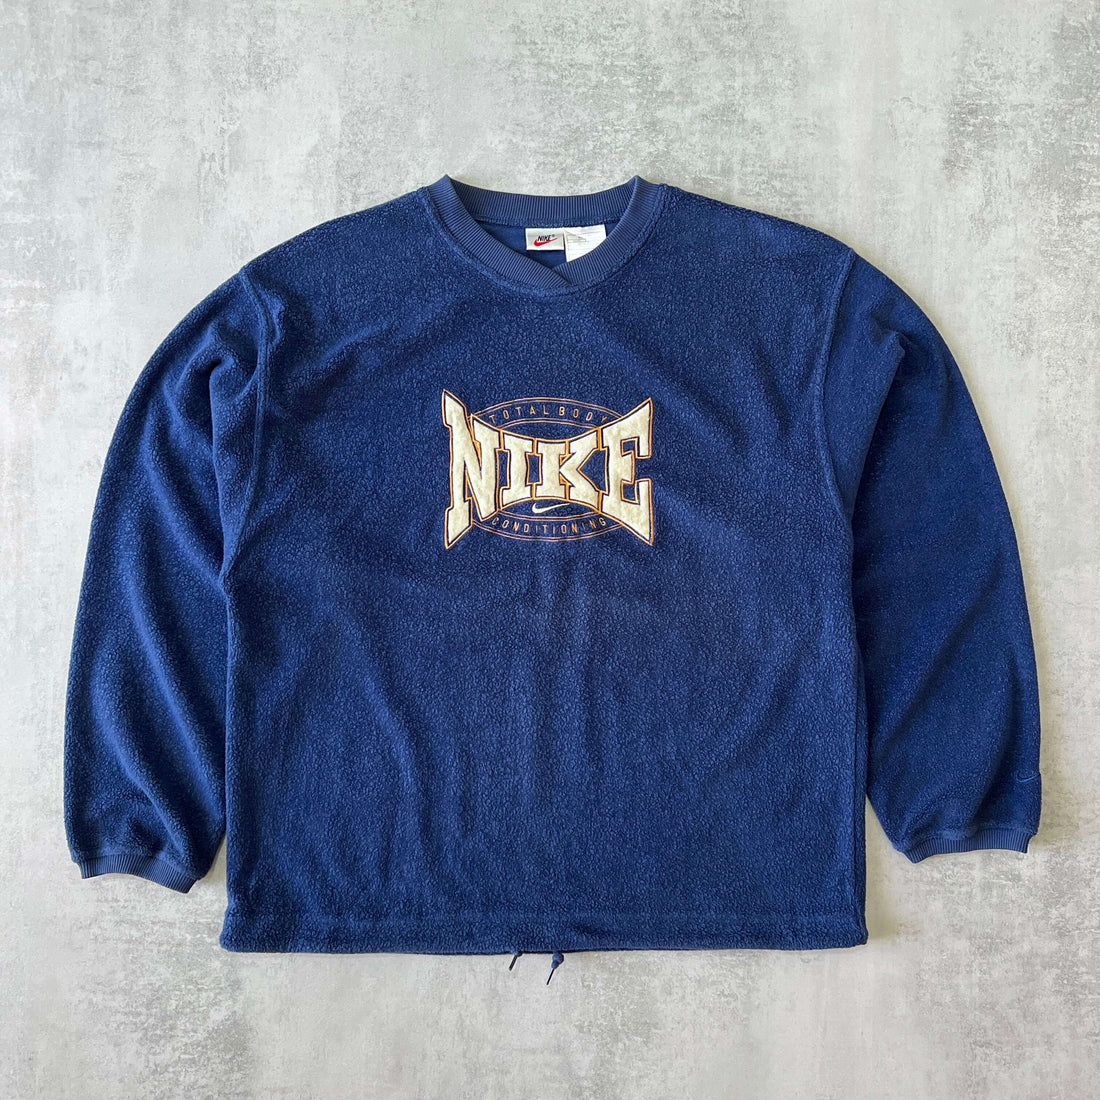 Nike RARE 1990s embroidered sweatshirt fleece (M)